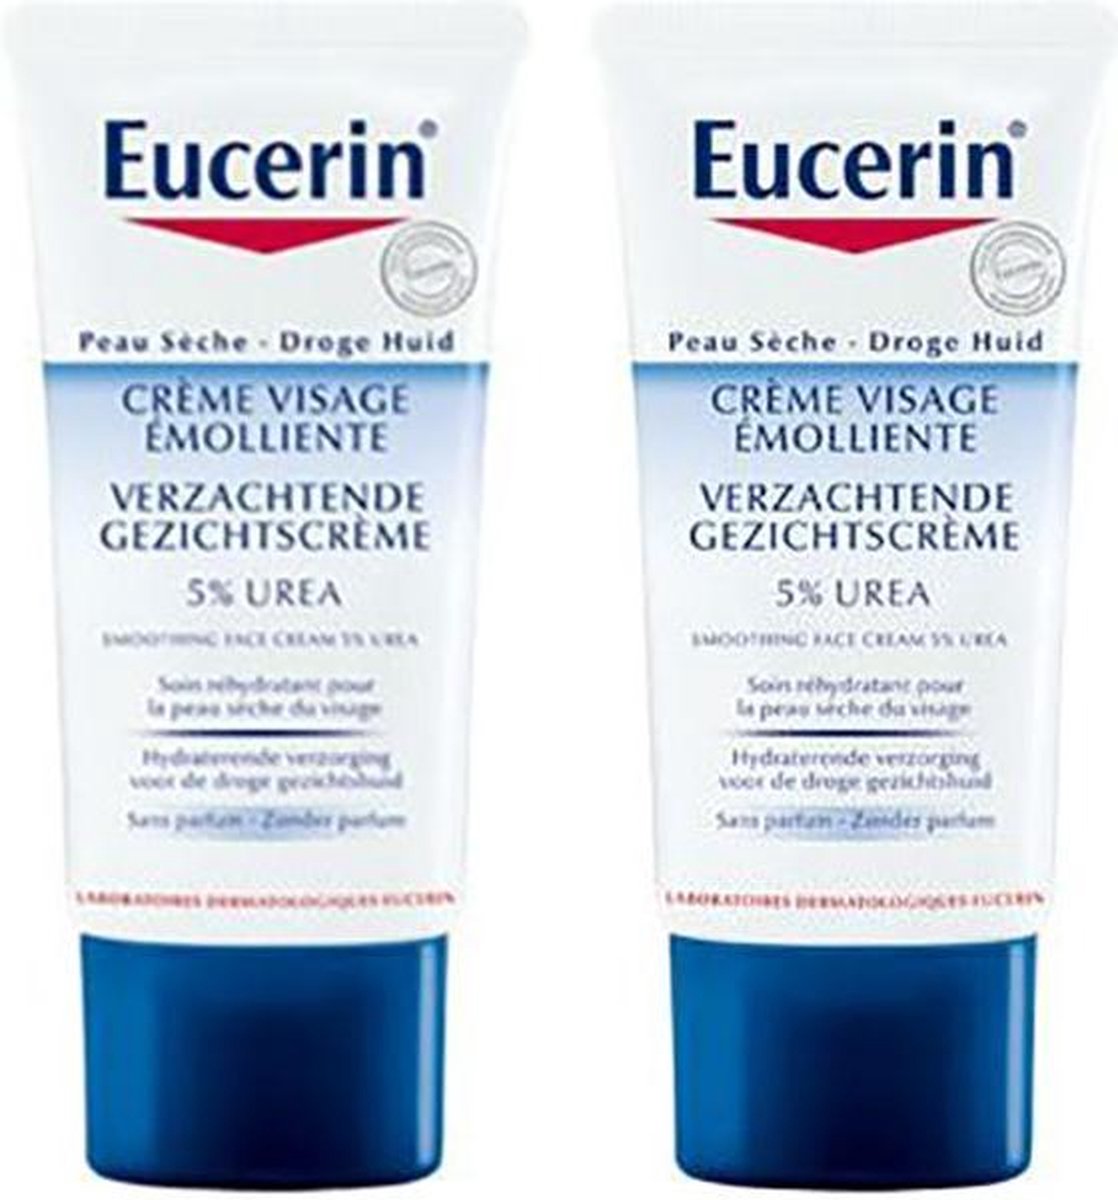 Eucerin Urea Gezichtscrème 5% Droge Huid - 2x50ml - Dagcrème | bol.com